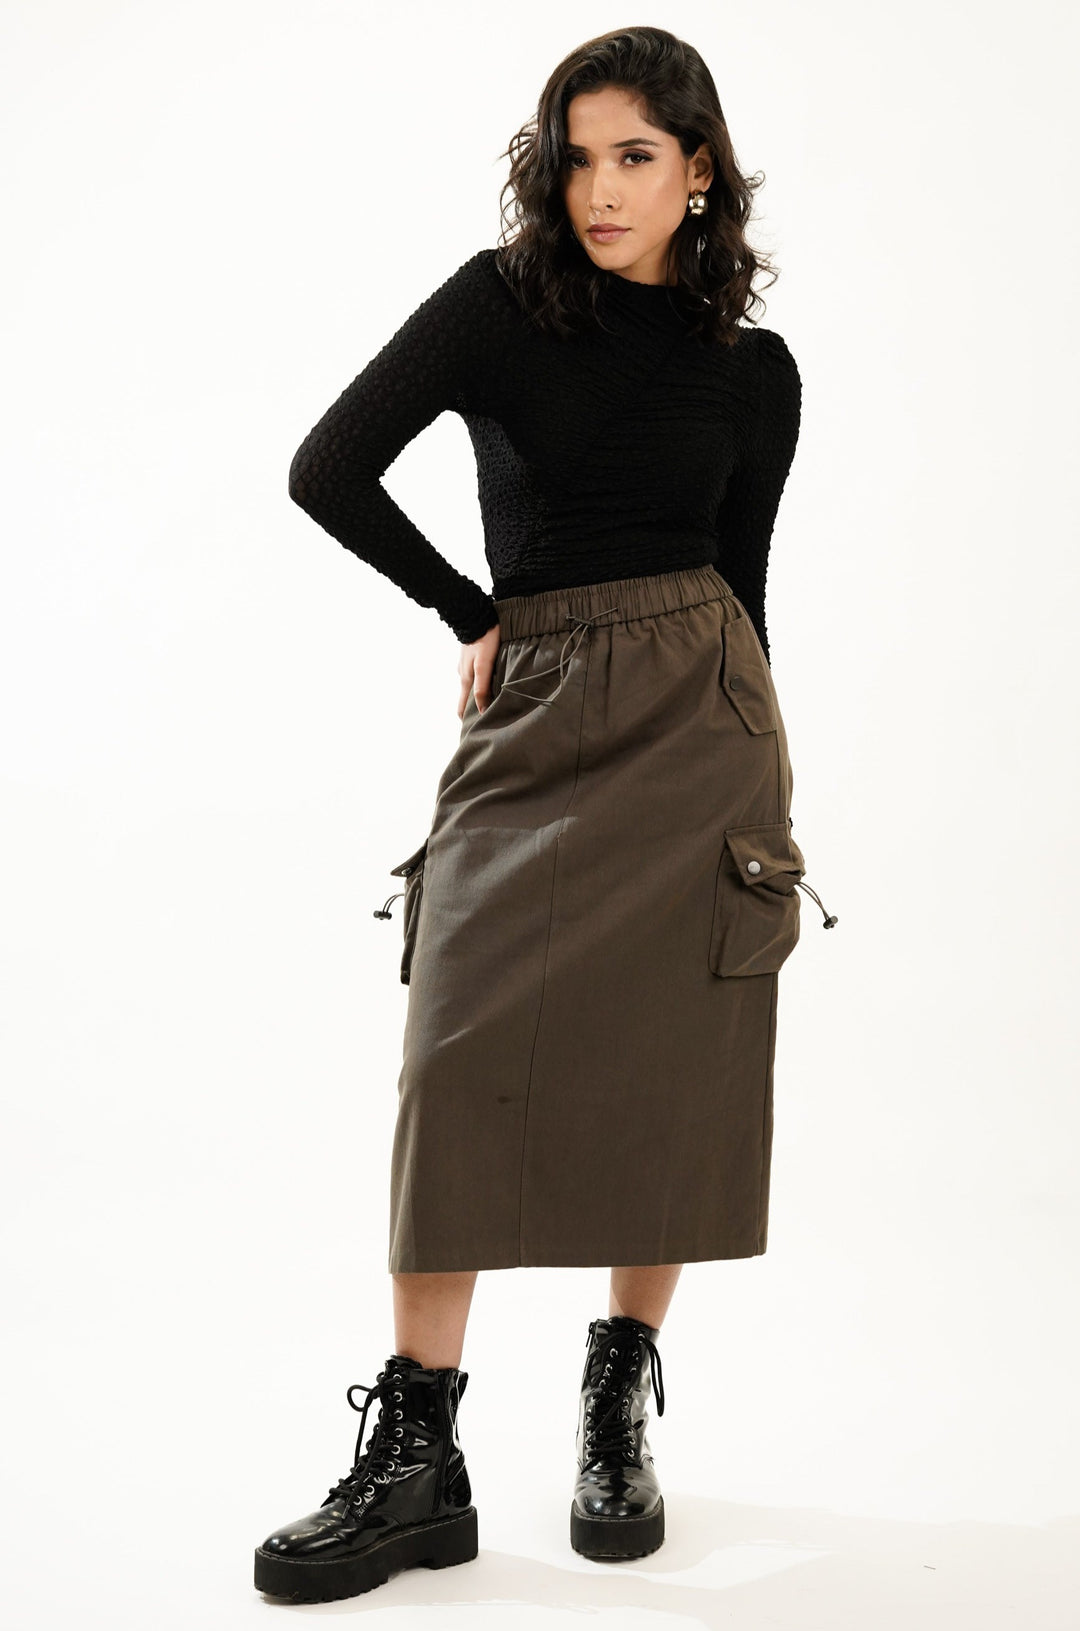 Shop green cargo skirt online at Nolabels